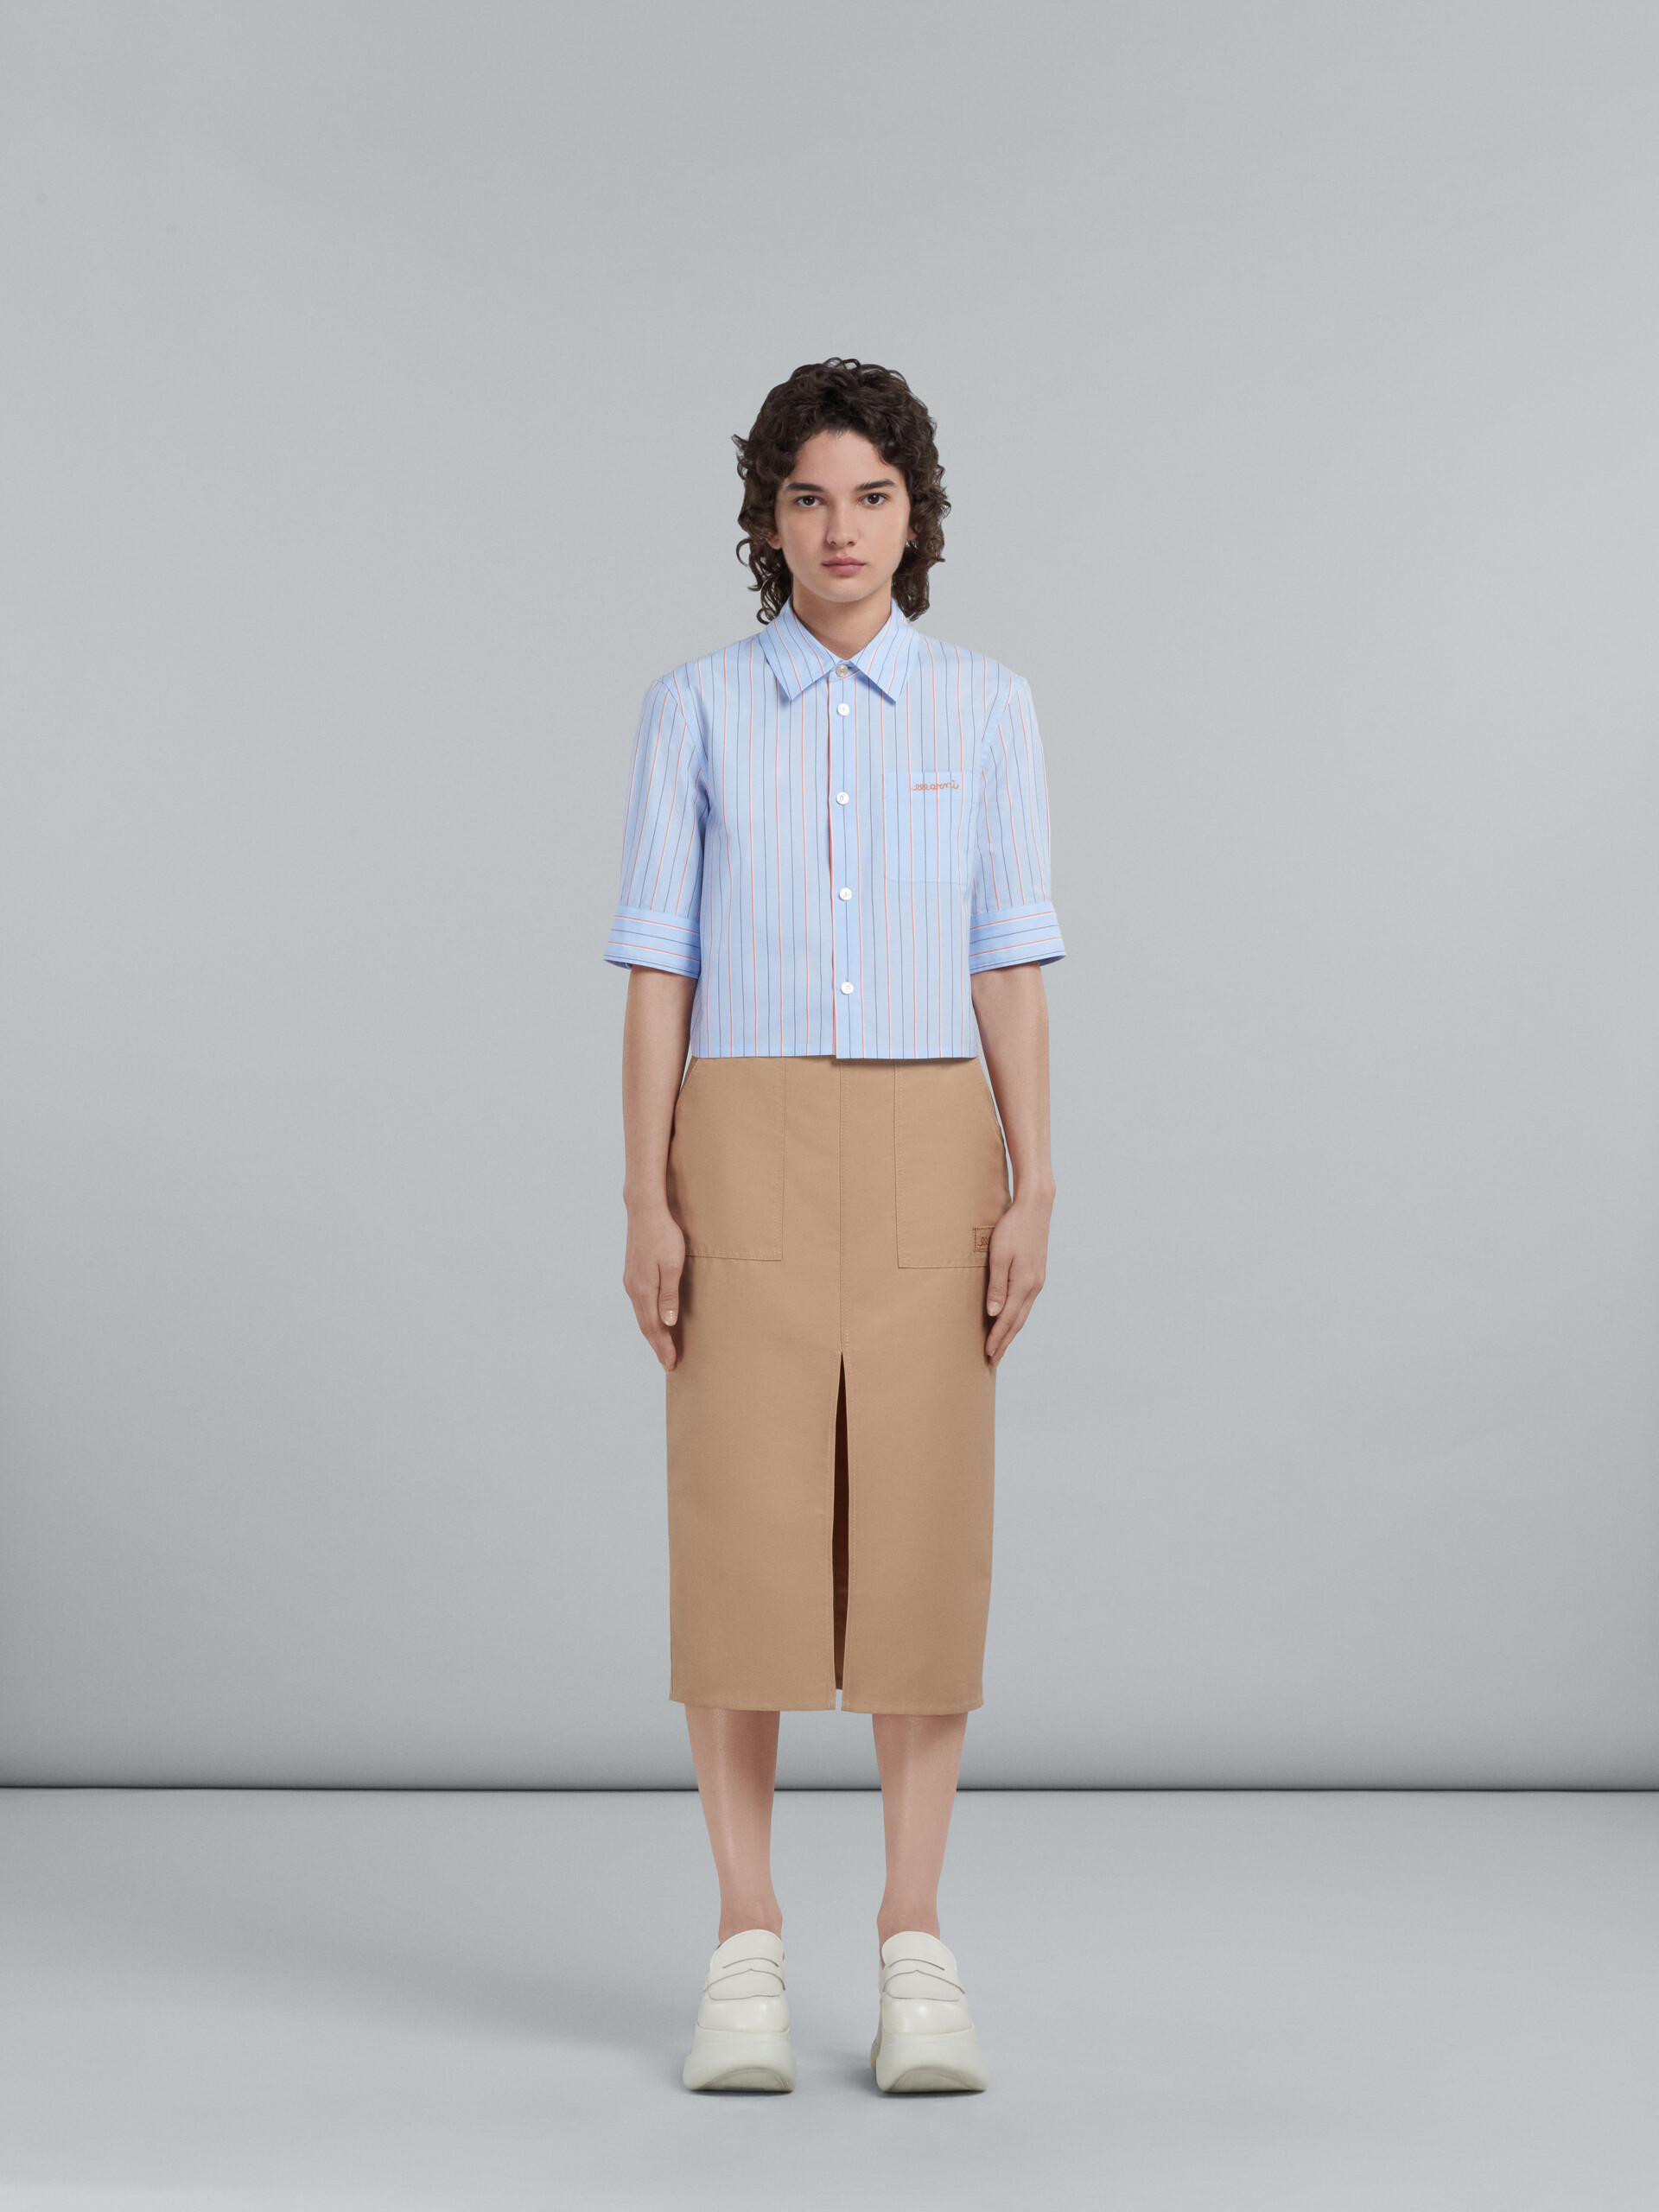 Beige skirt in technical cotton-linen - Skirts - Image 2